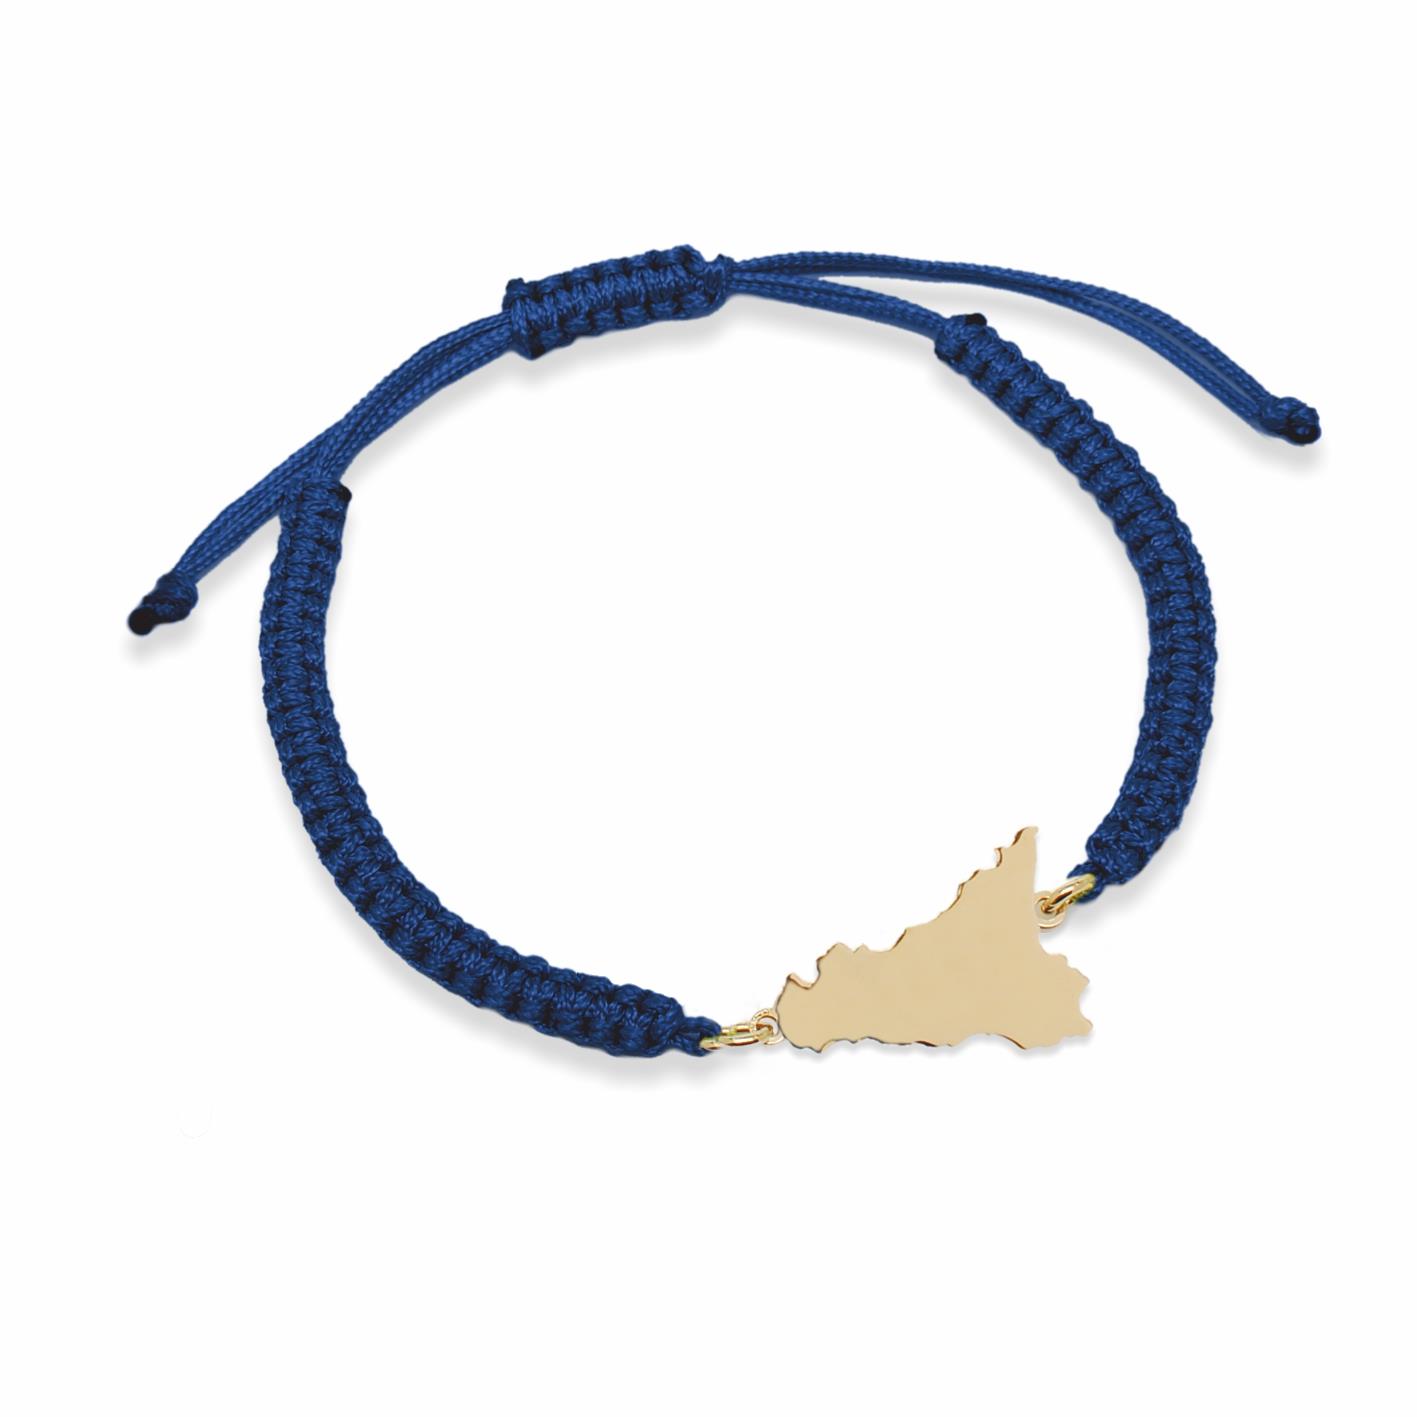 Blue nylon bracelet with Sicily symbol in golden silver - MY SICILY